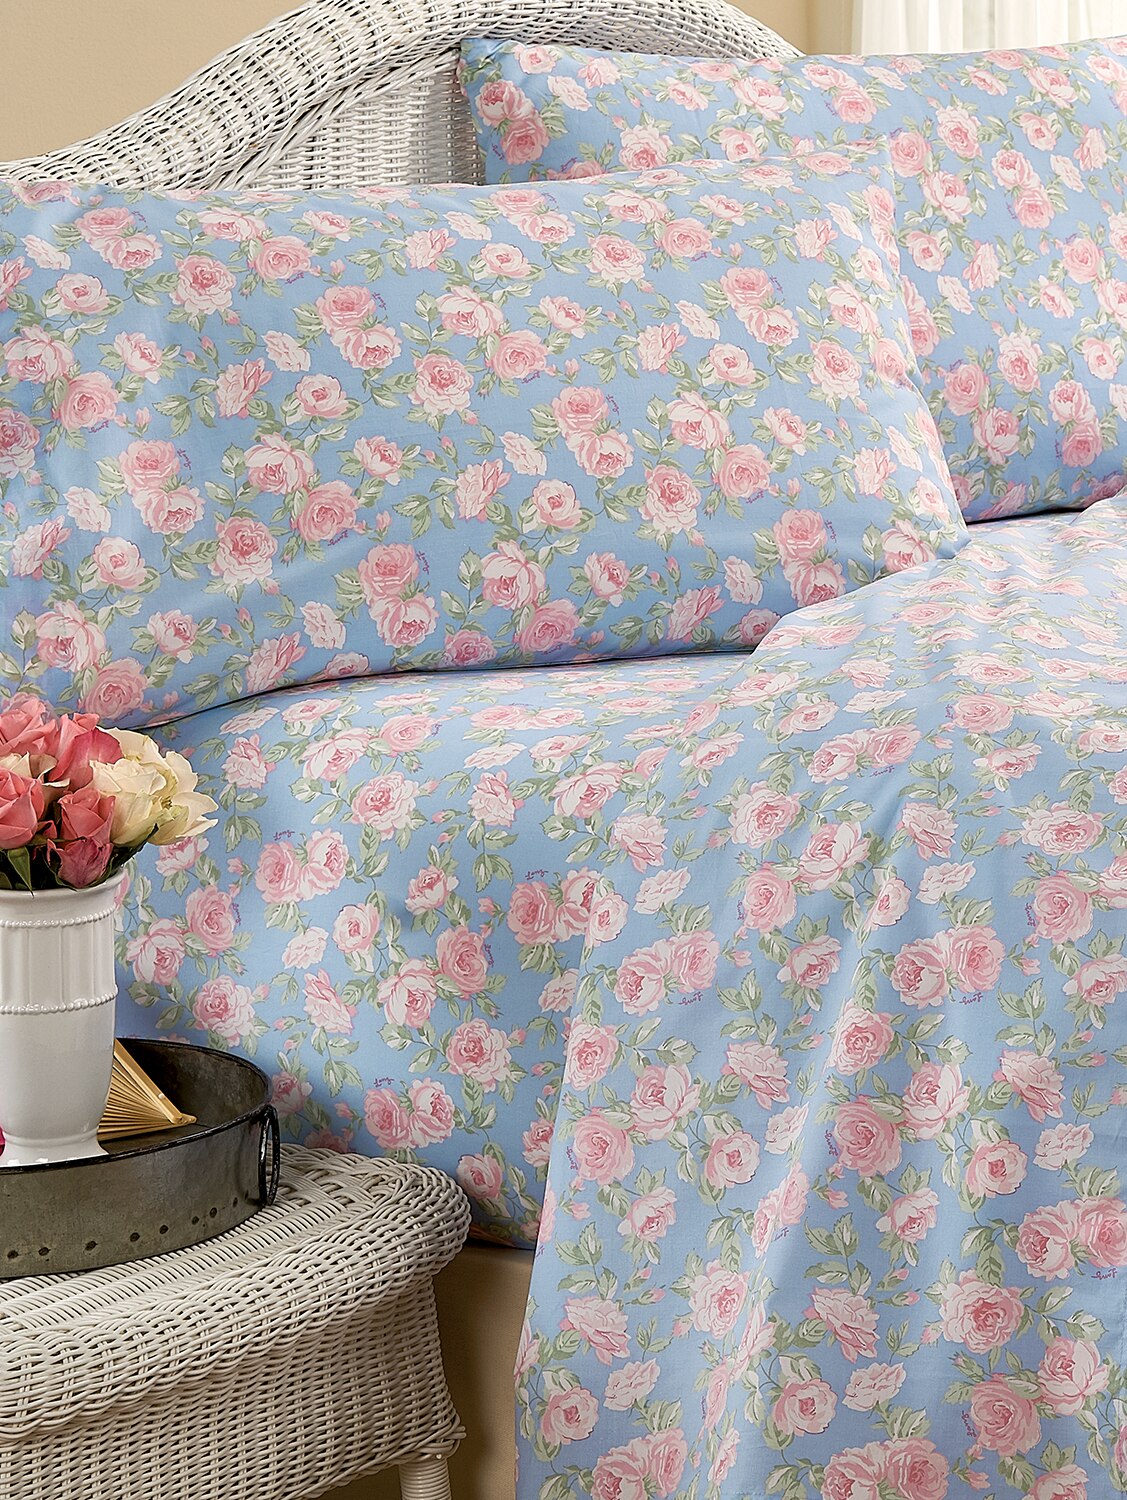 100% Soft Brushed Warm Rosebud Flannelette Sheet Flat Fitted Sheet Pillowcase 